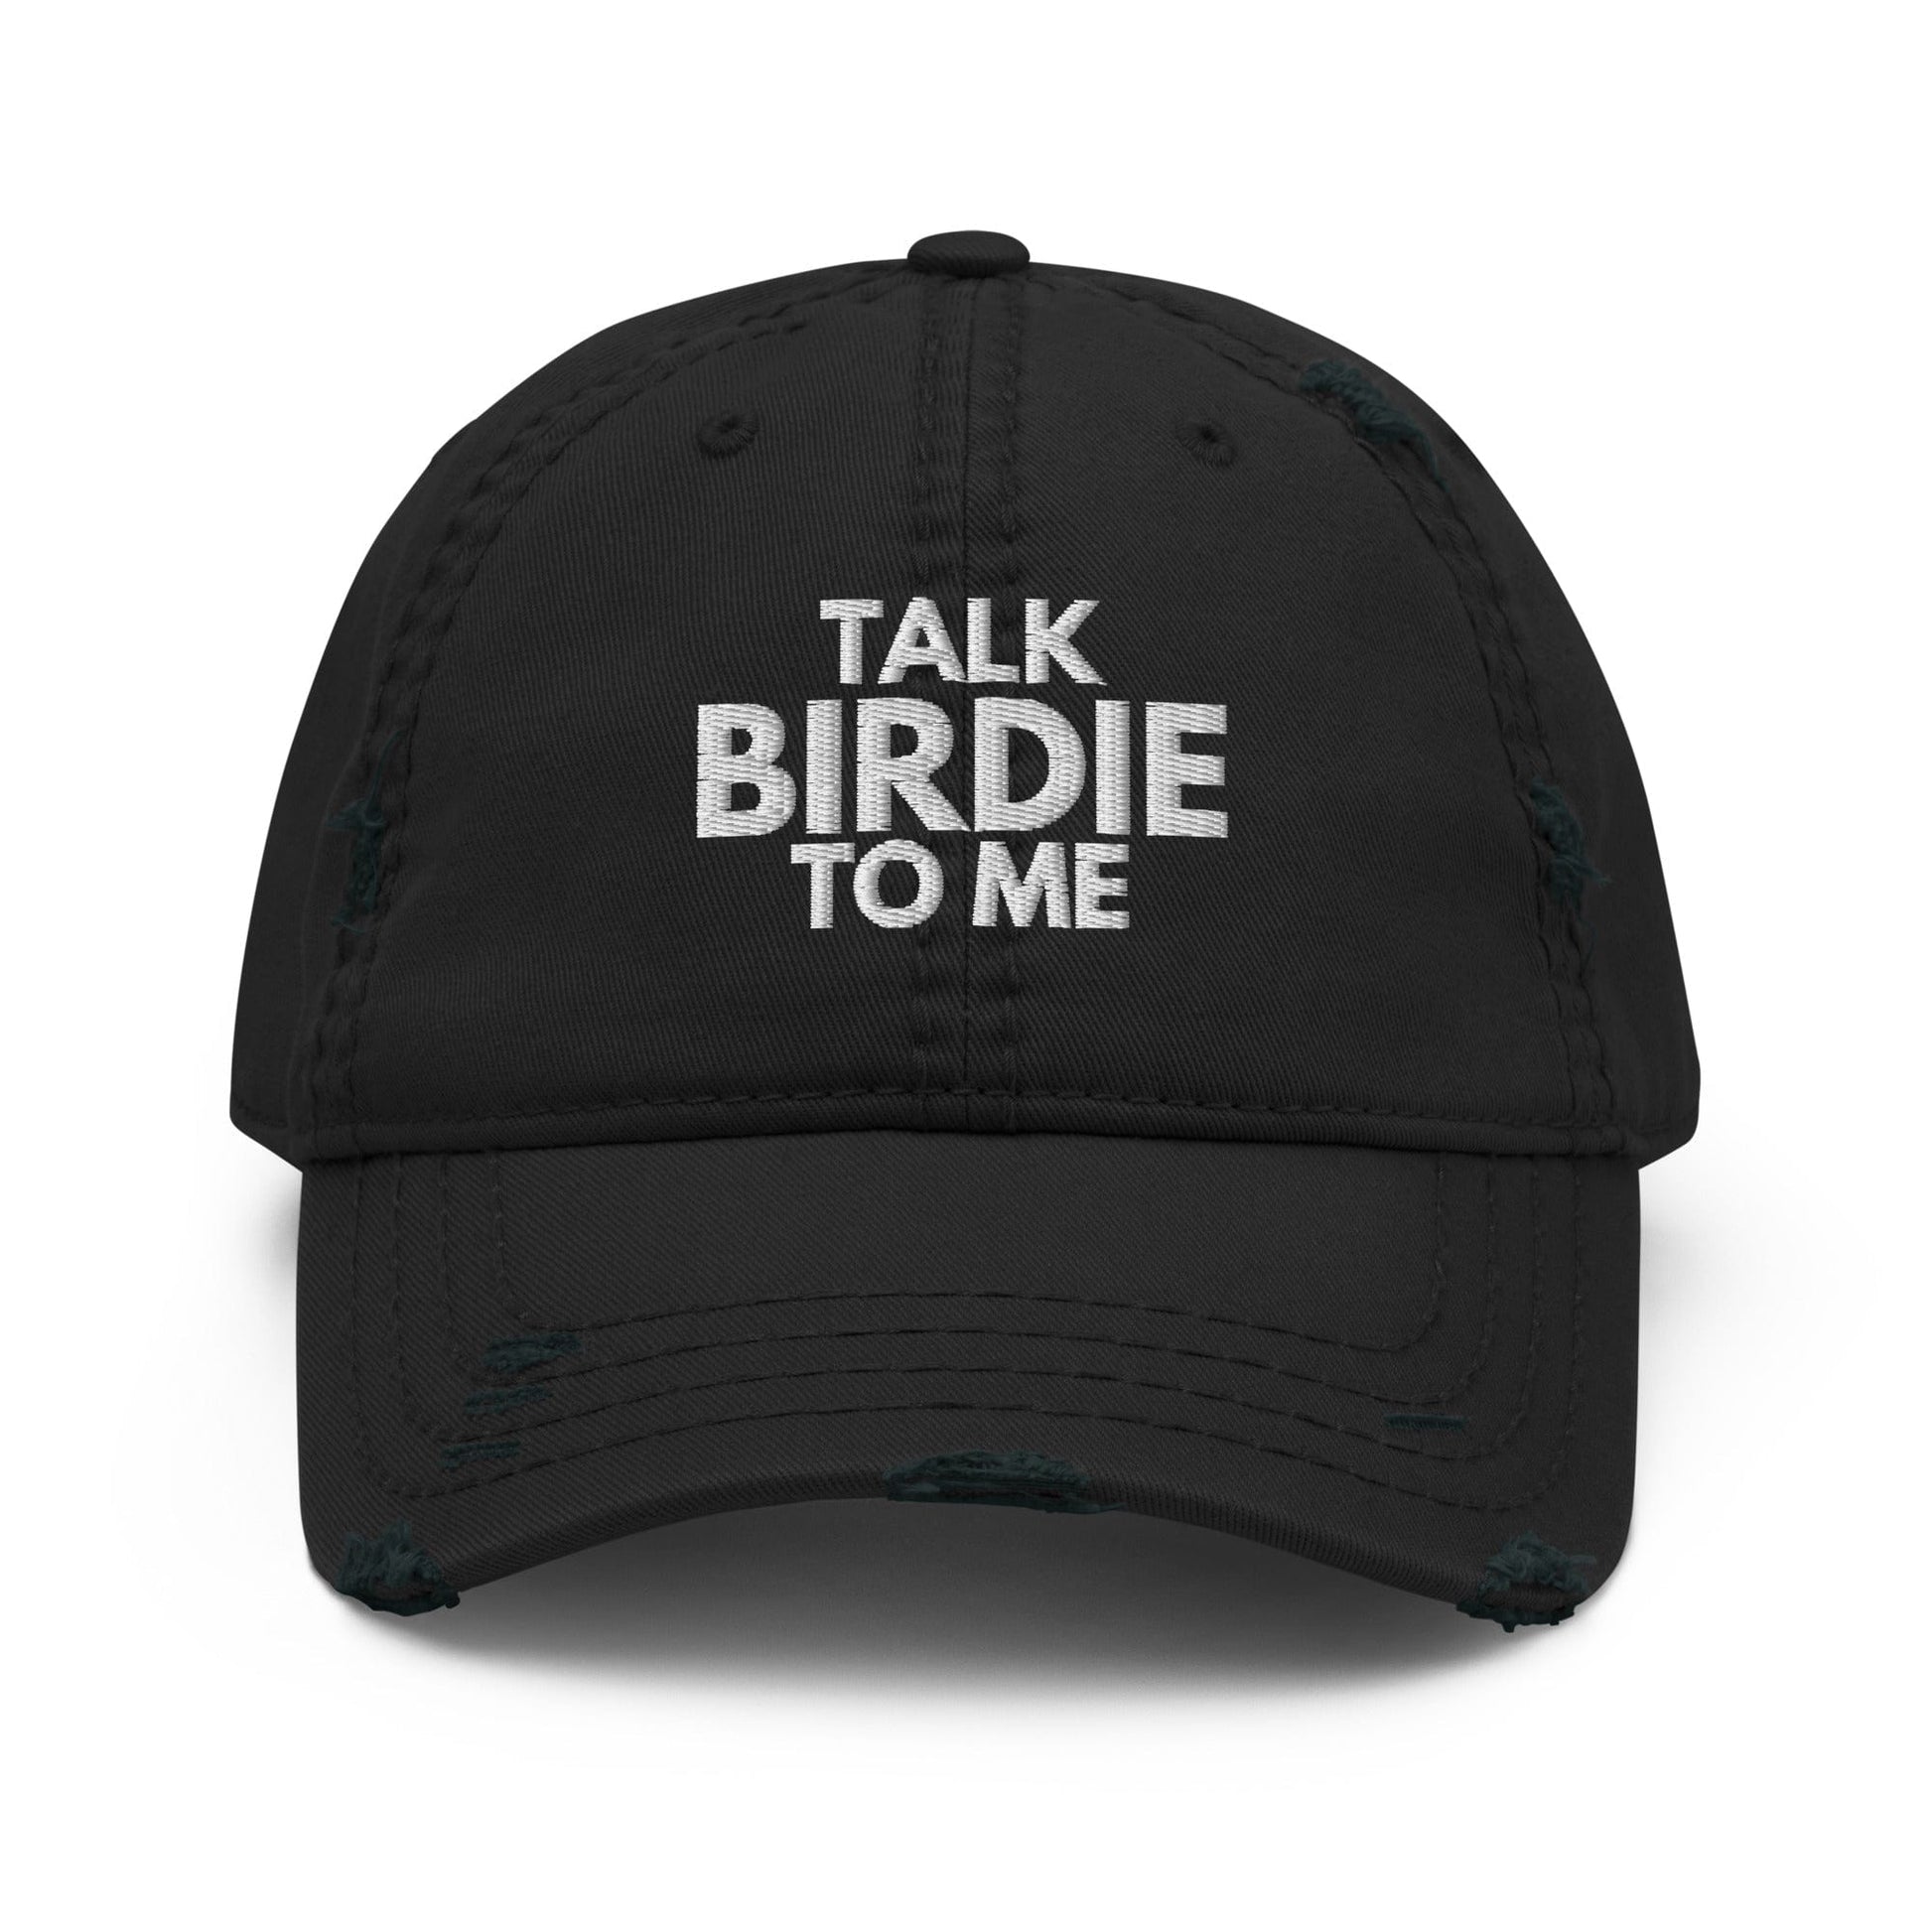 Funny Golfer Gifts  Distressed Cap Black Talk Birdie To Me Hat Distressed Hat